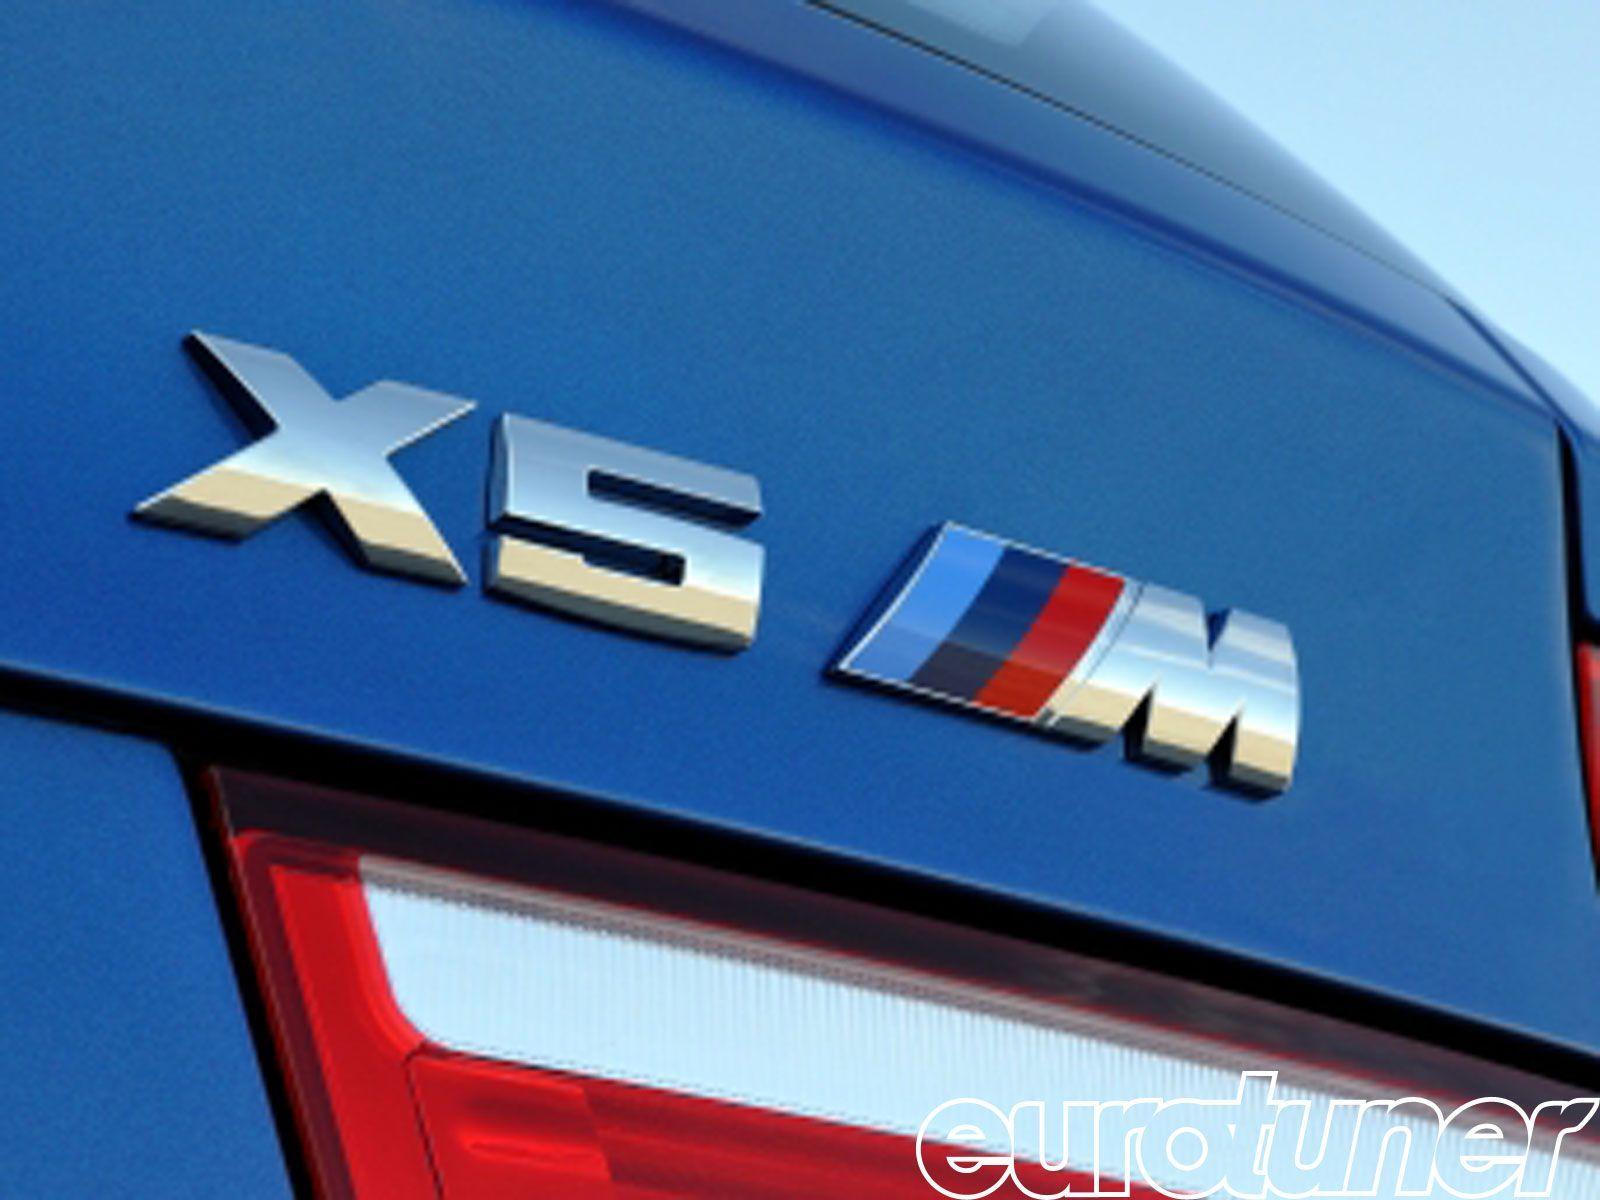 BMW M Division Logo - 2012 BMW M Performance Cars Widens M Car Branding Photo & Image Gallery